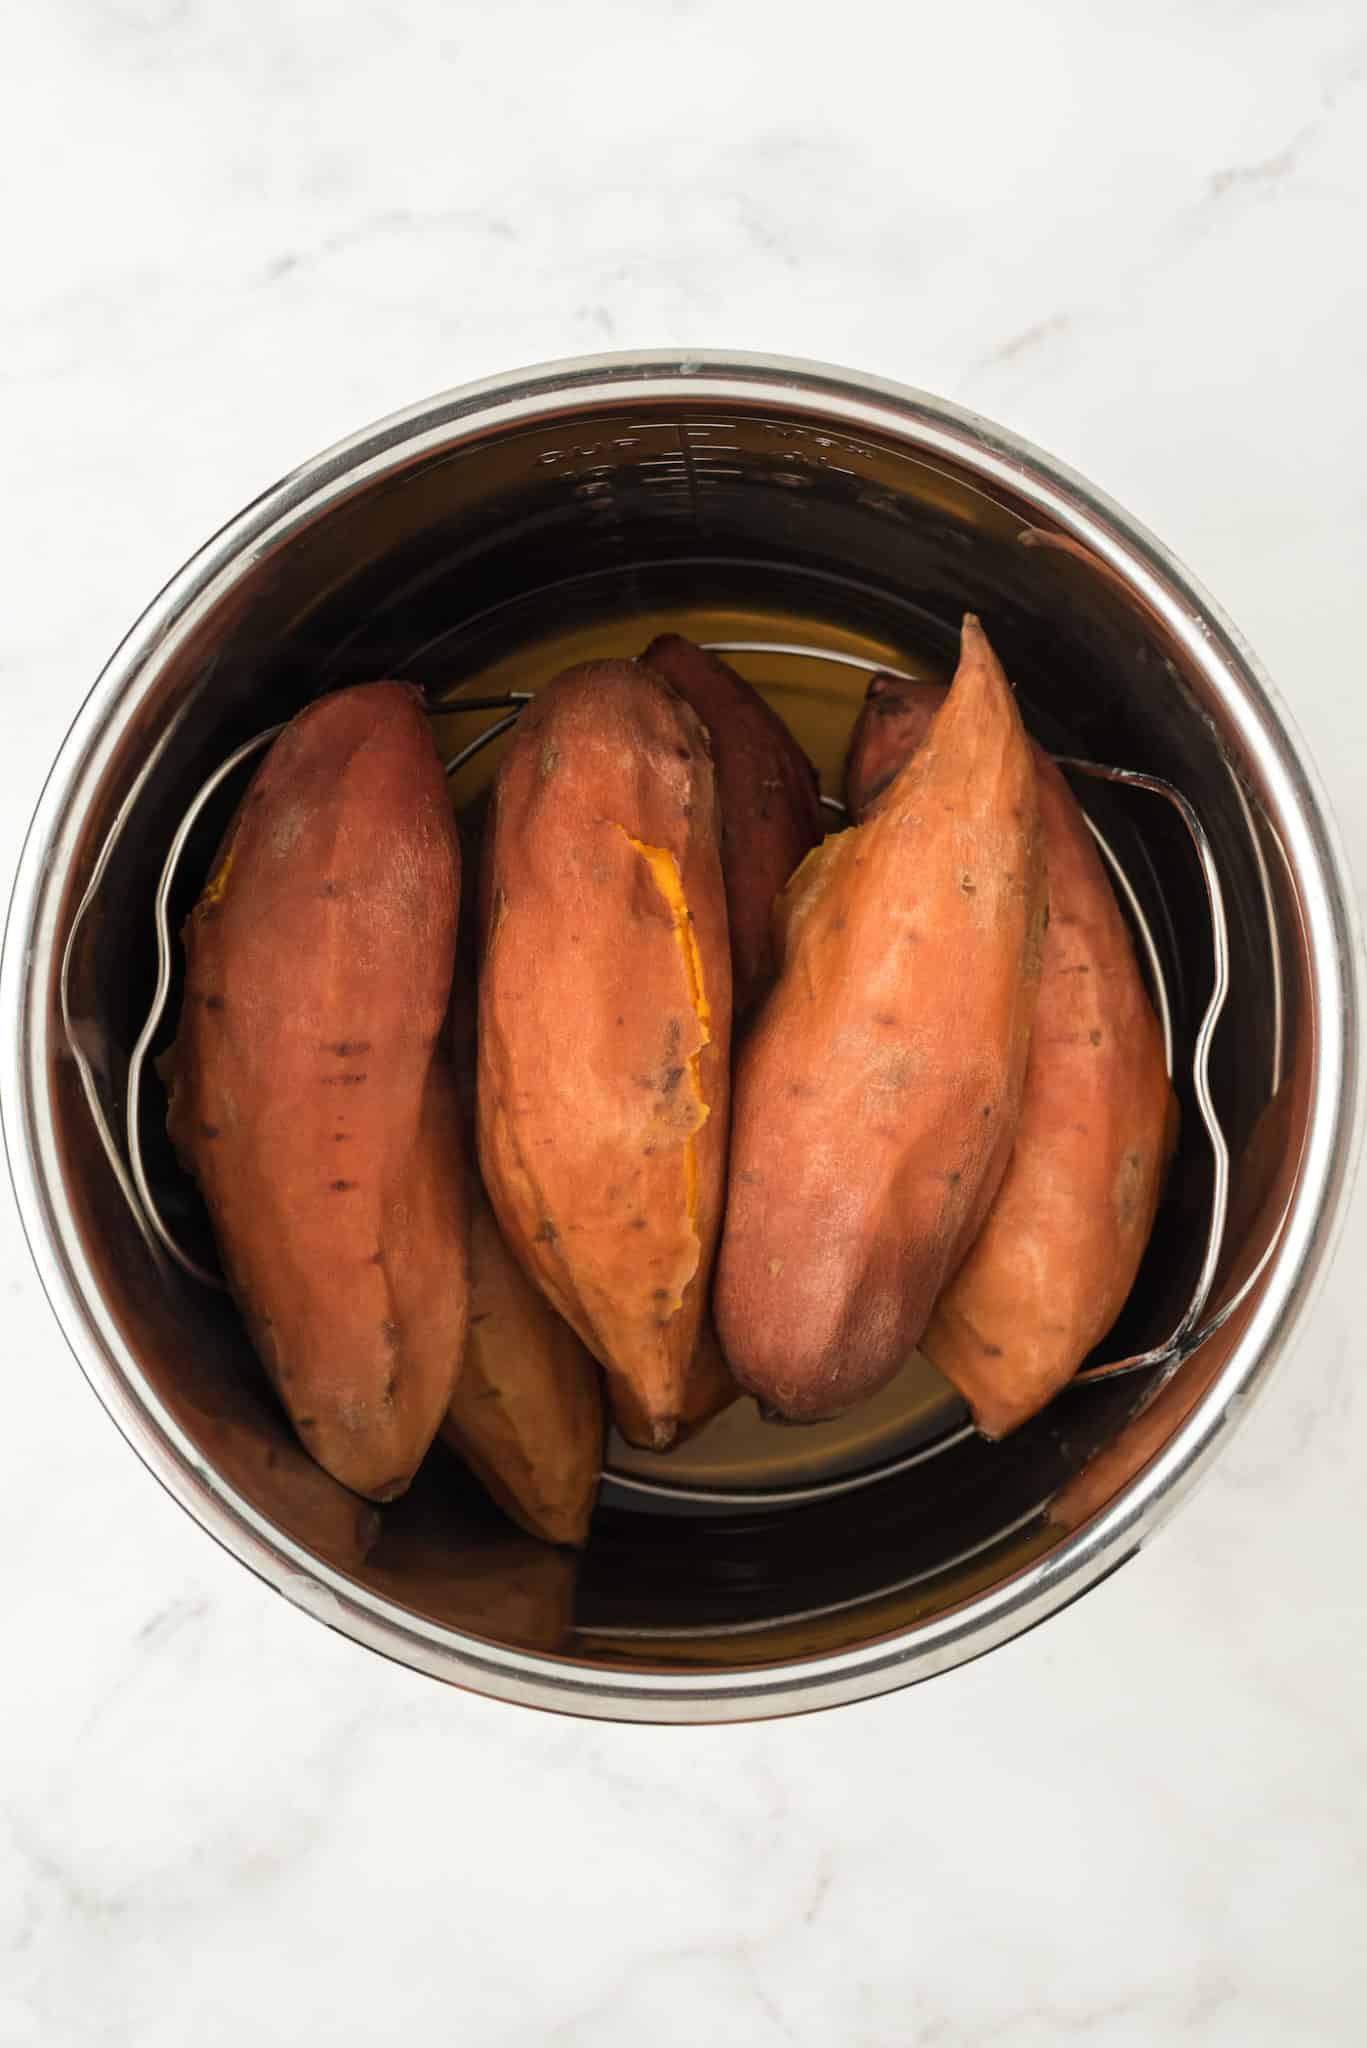 baked sweet potatoes inside pressure cooker.